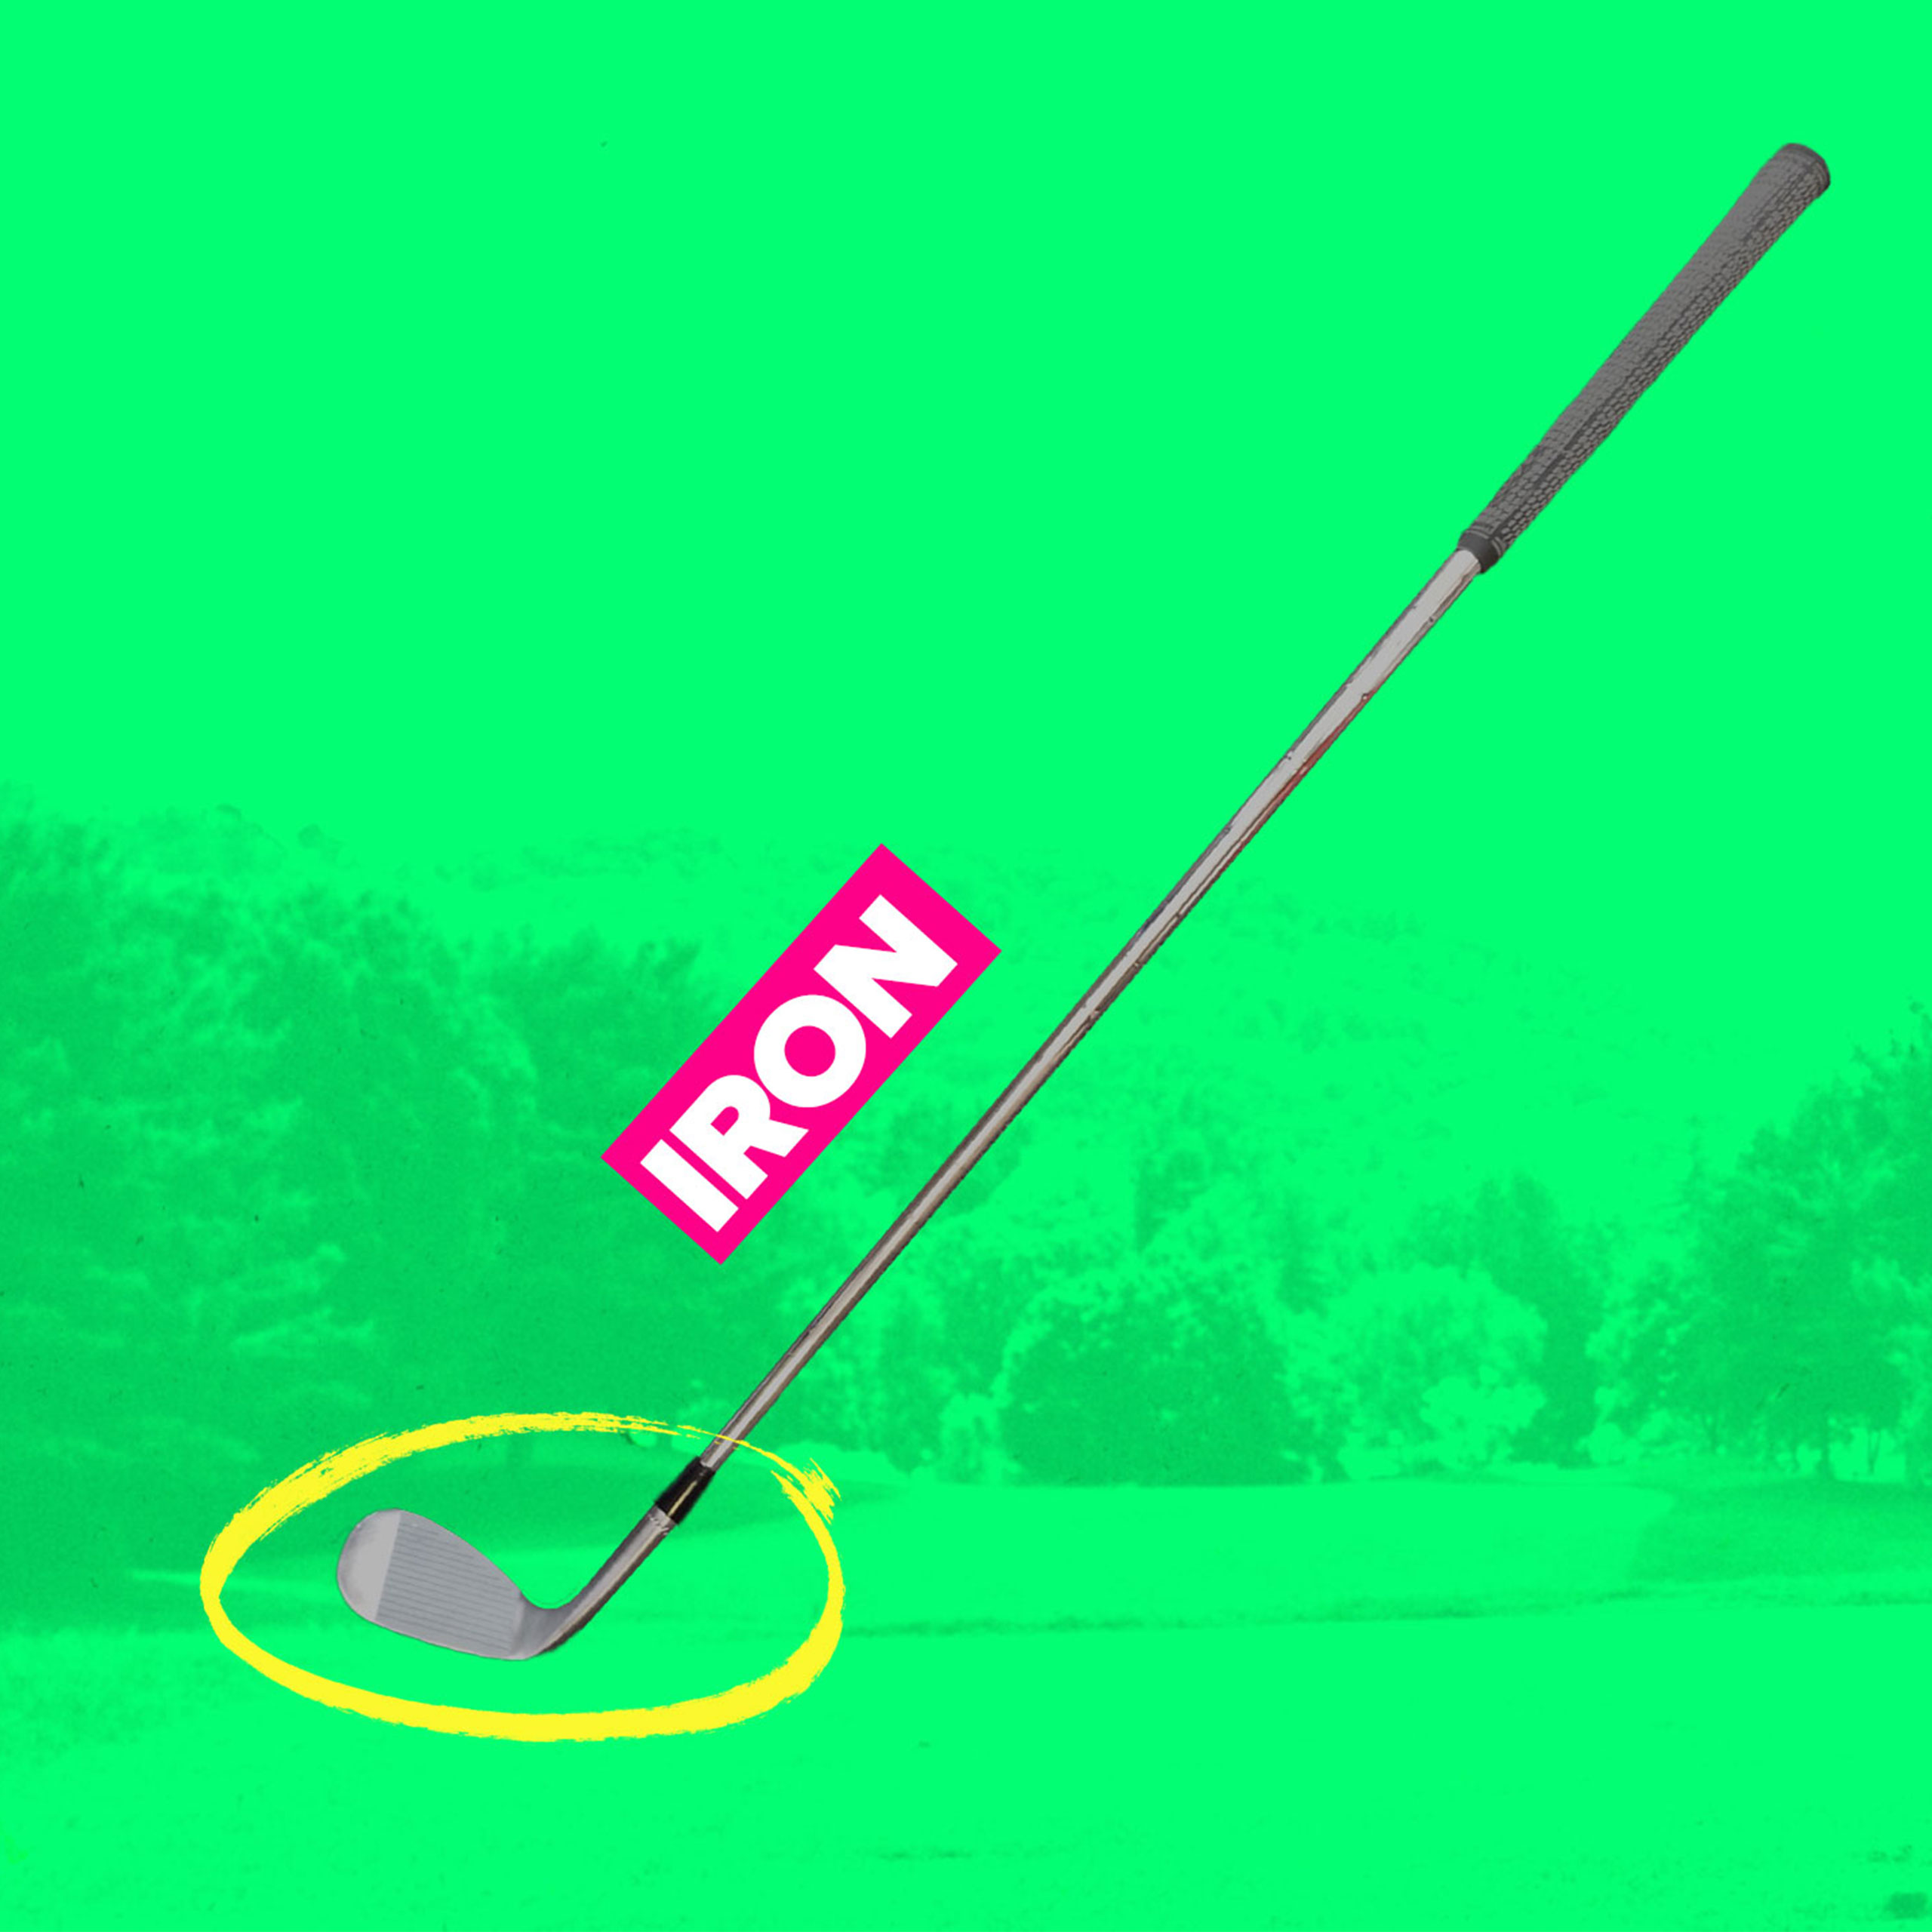 Iron golf club